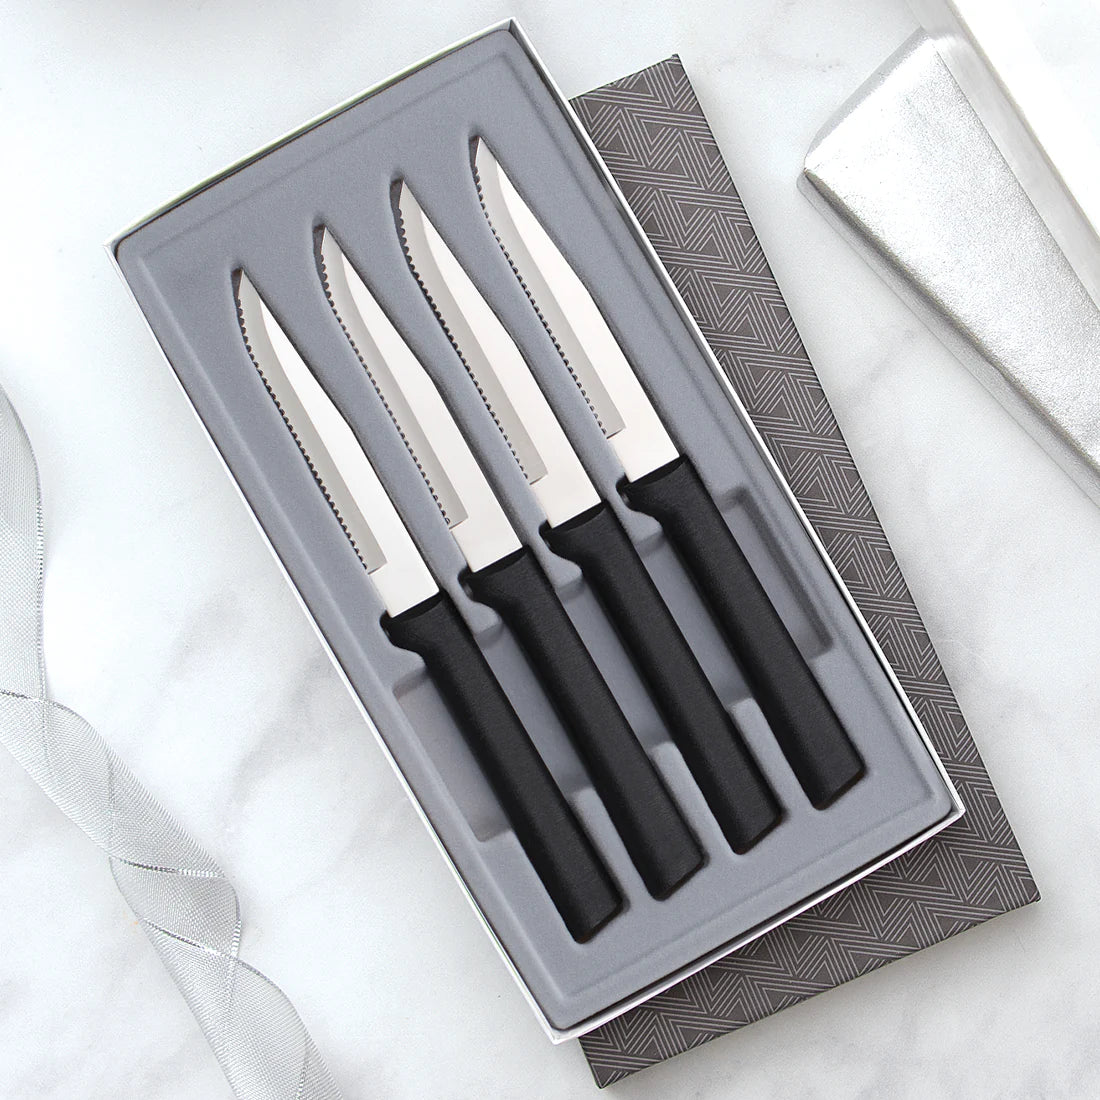 RADA Cutlery - Four Serrated Steak Knives Gift Set